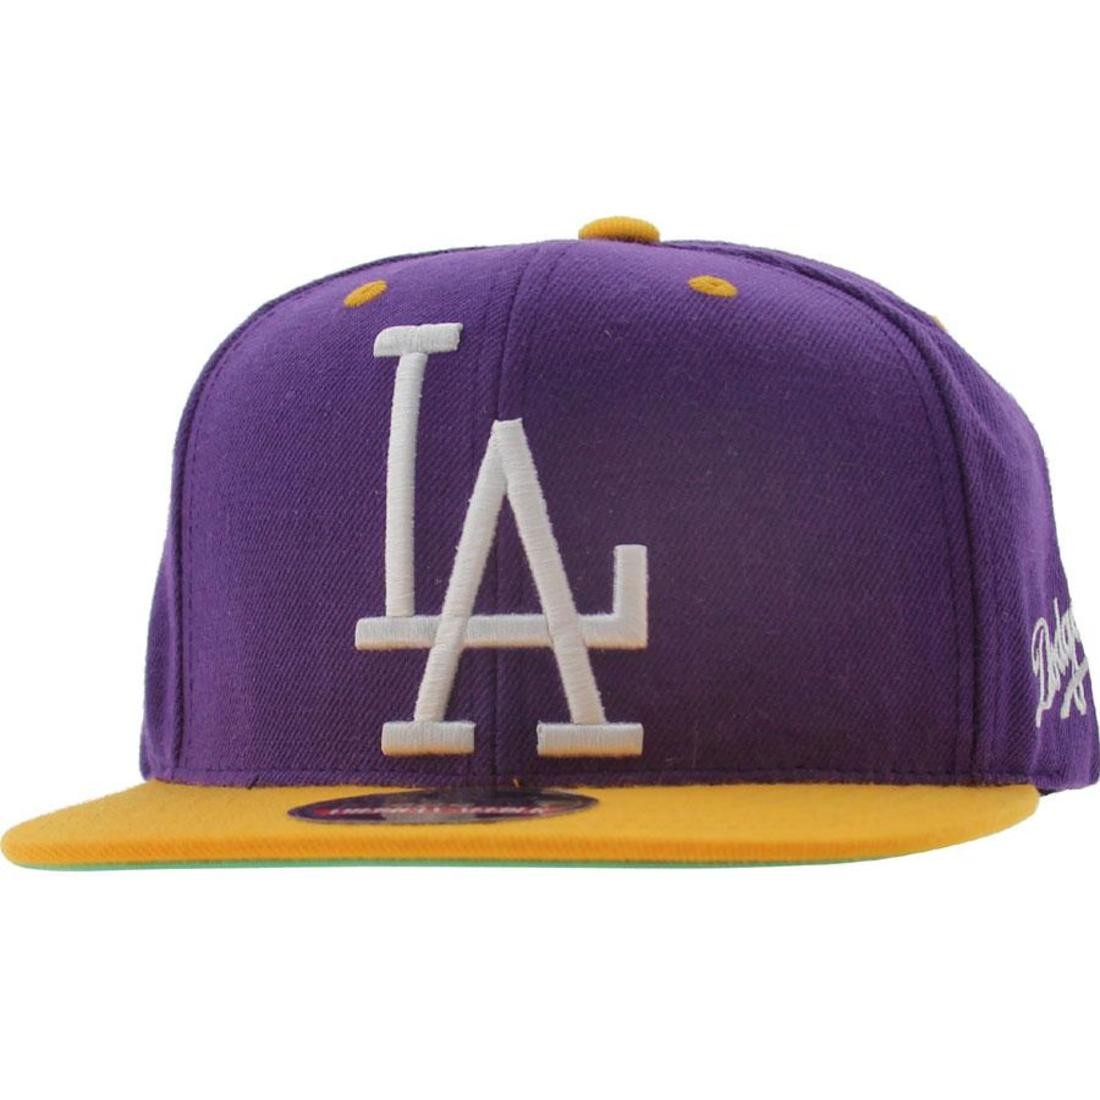 American Needle Los Angeles Dodgers Snapback Cap (purple / gold) - PYS.com Exclusive